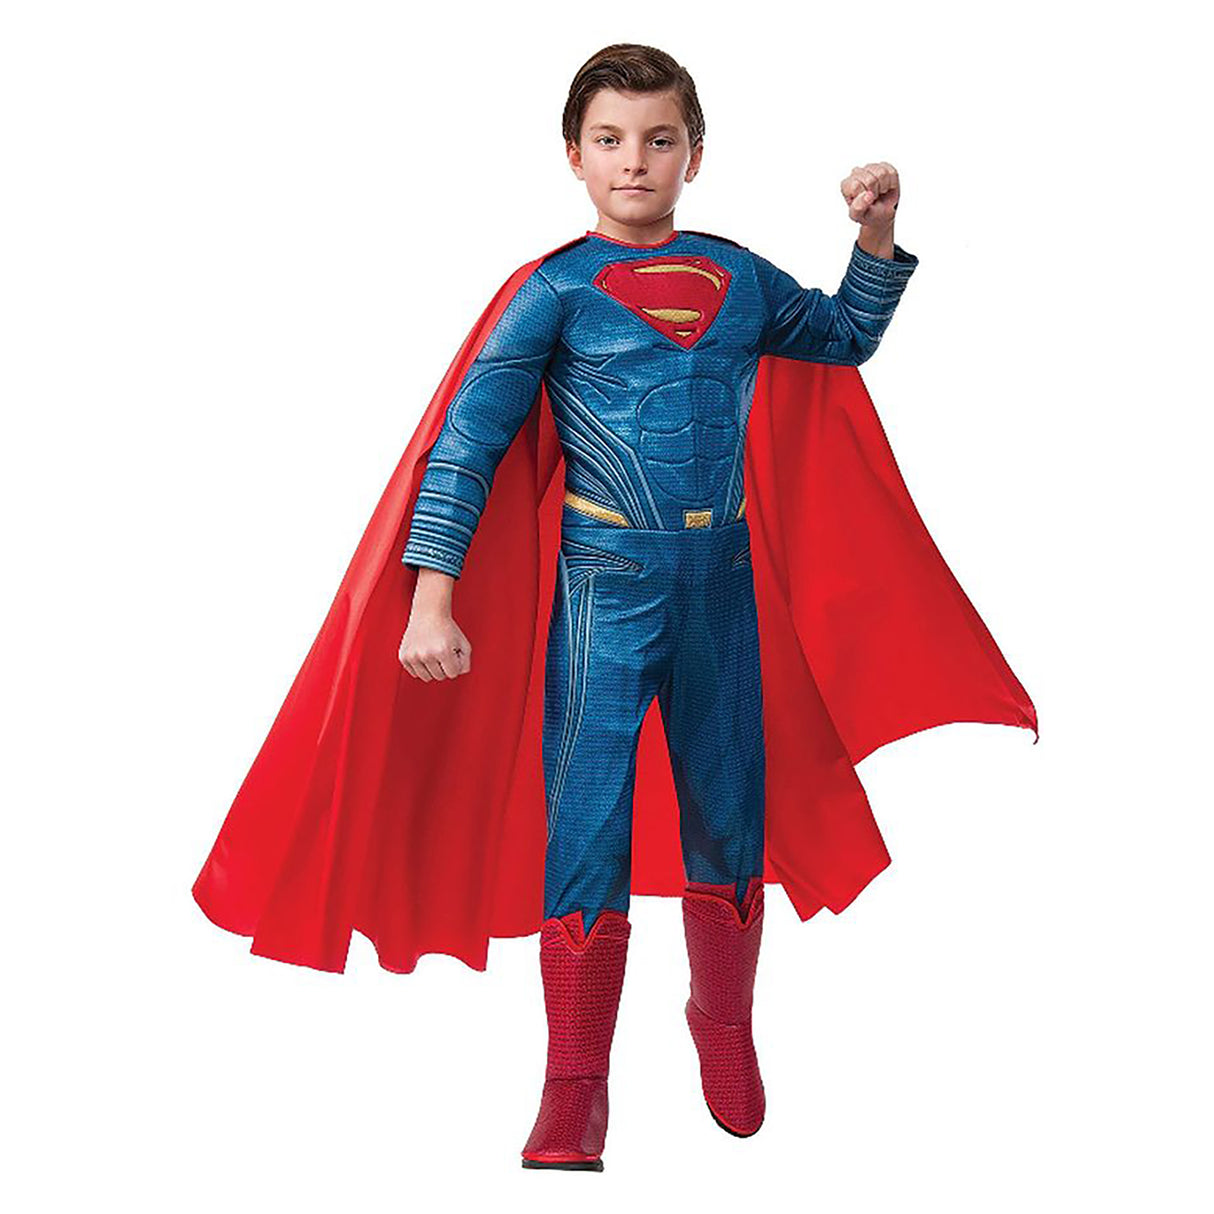 Rubies DC Comics Superman Premium Child Costume, Blue/Red (Kids)